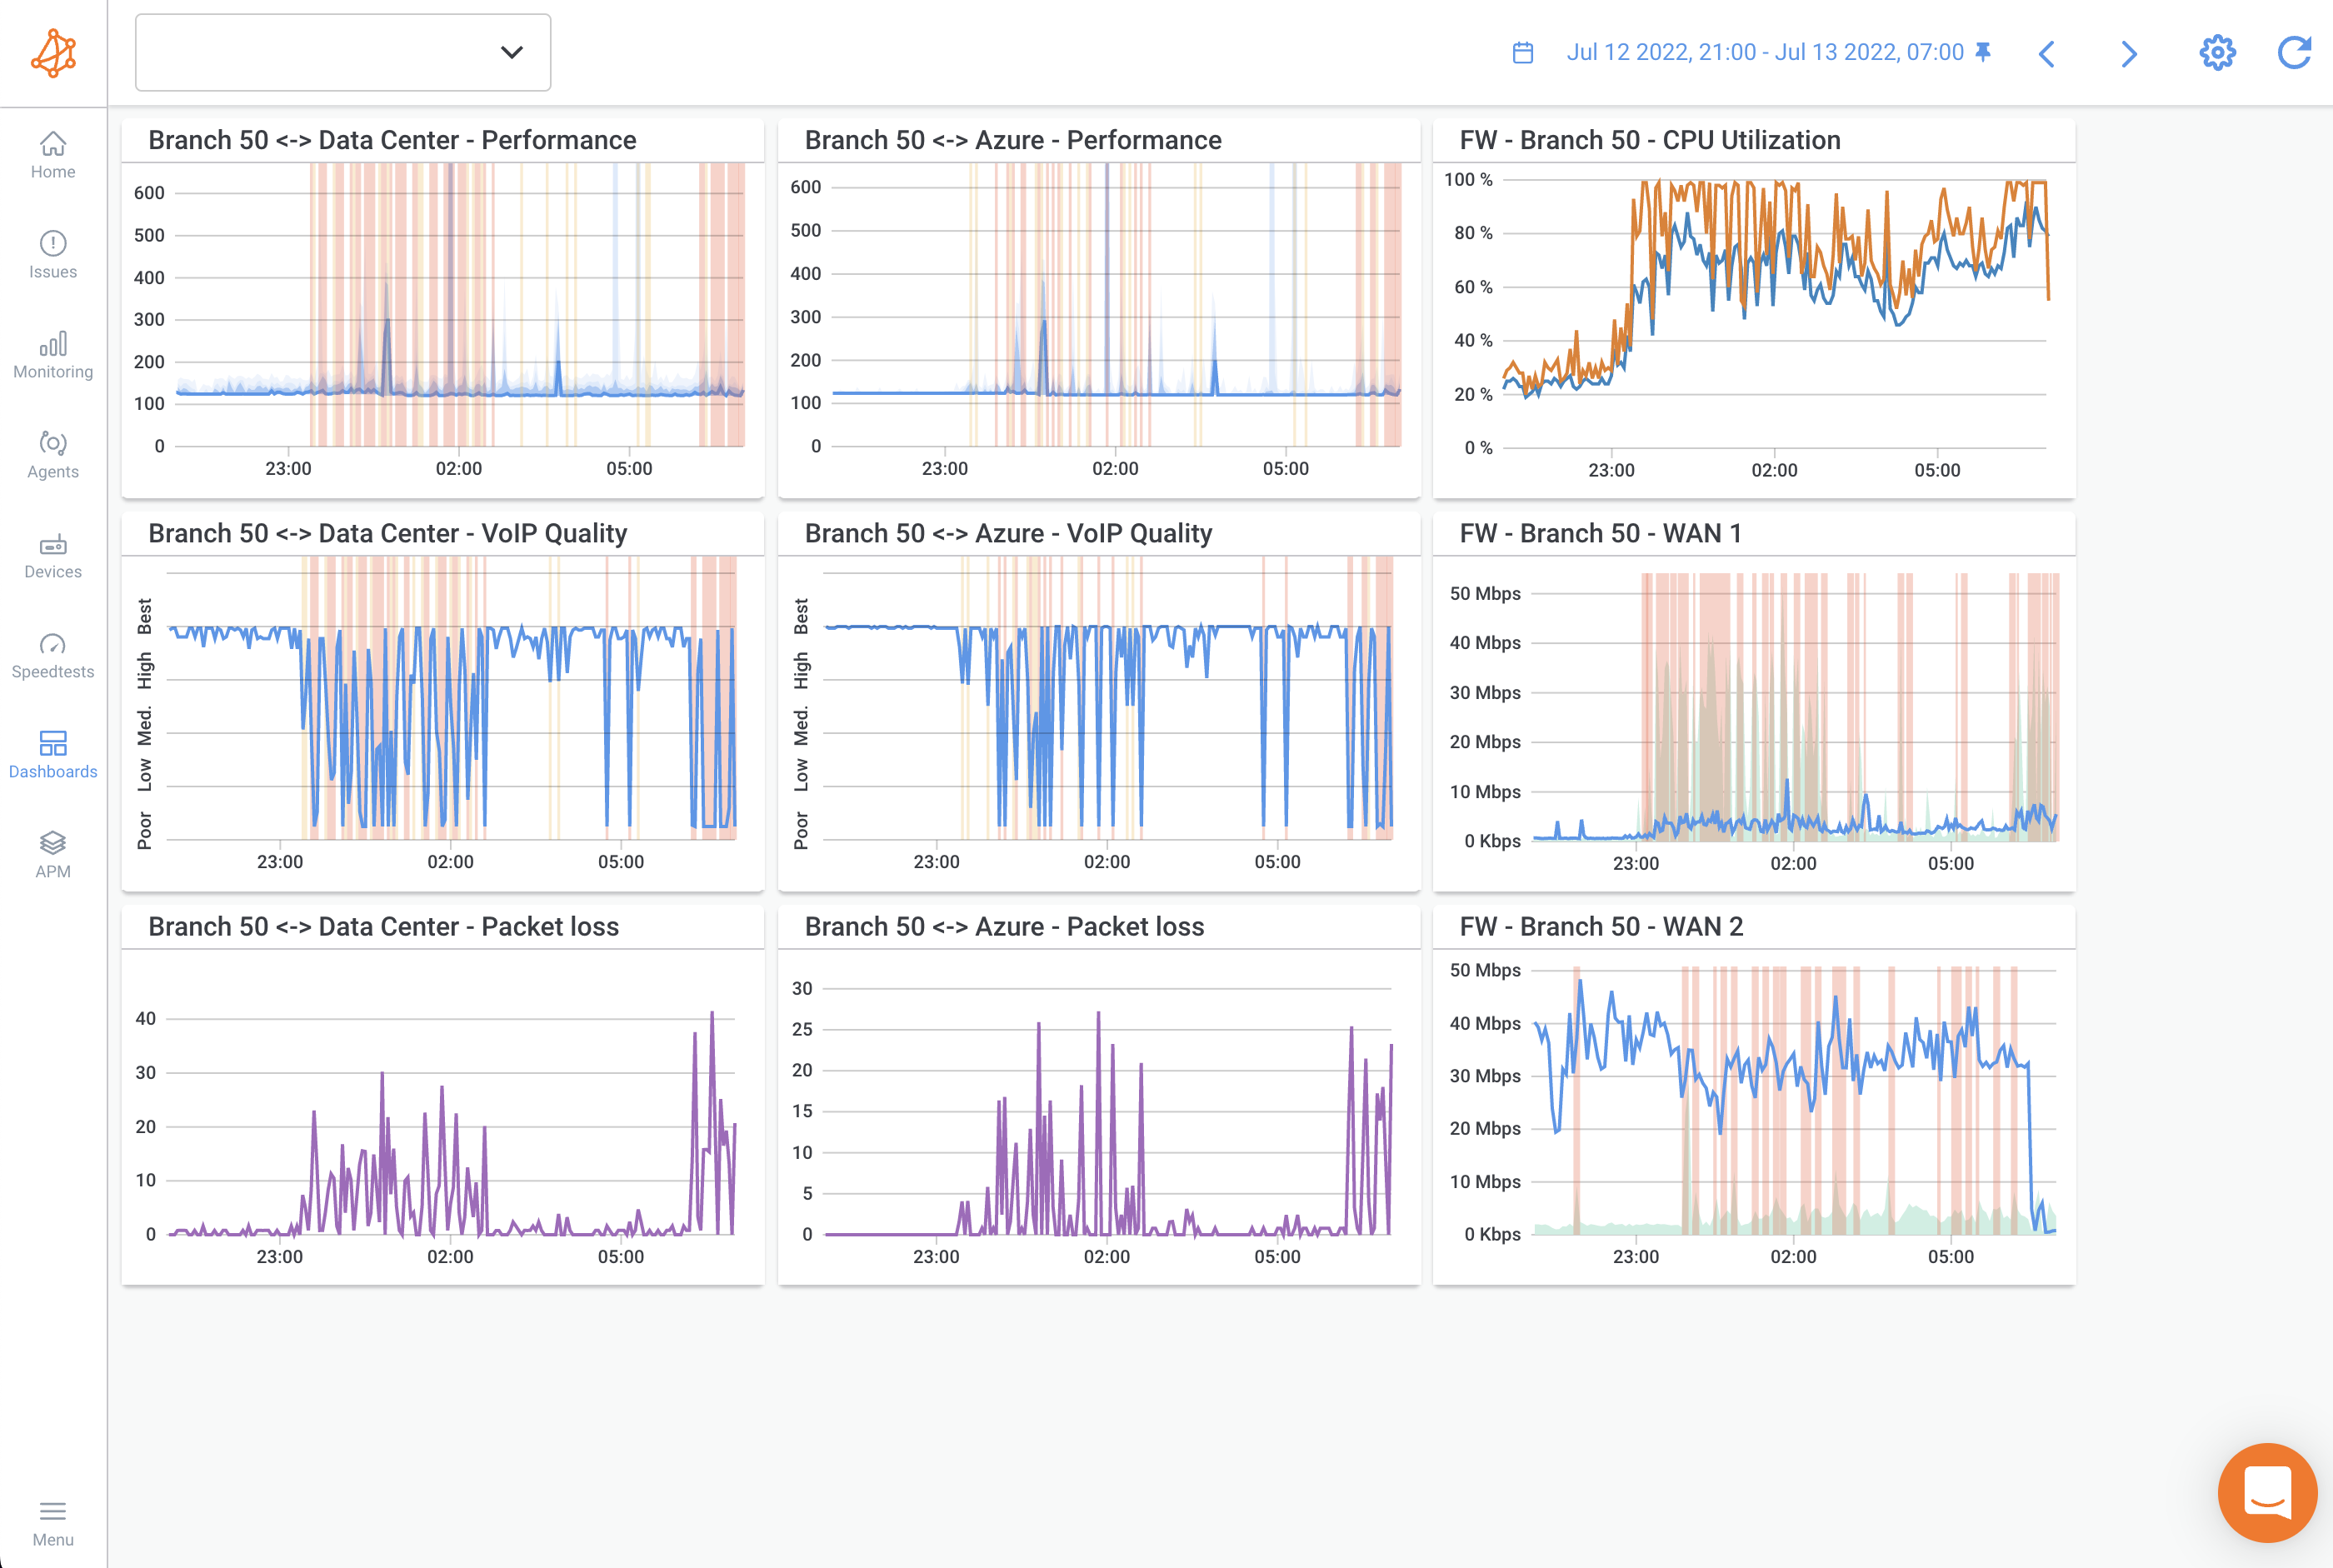 Obkio Network Performance Monitoring - Dashboard showing Network Device Monitoring metrics